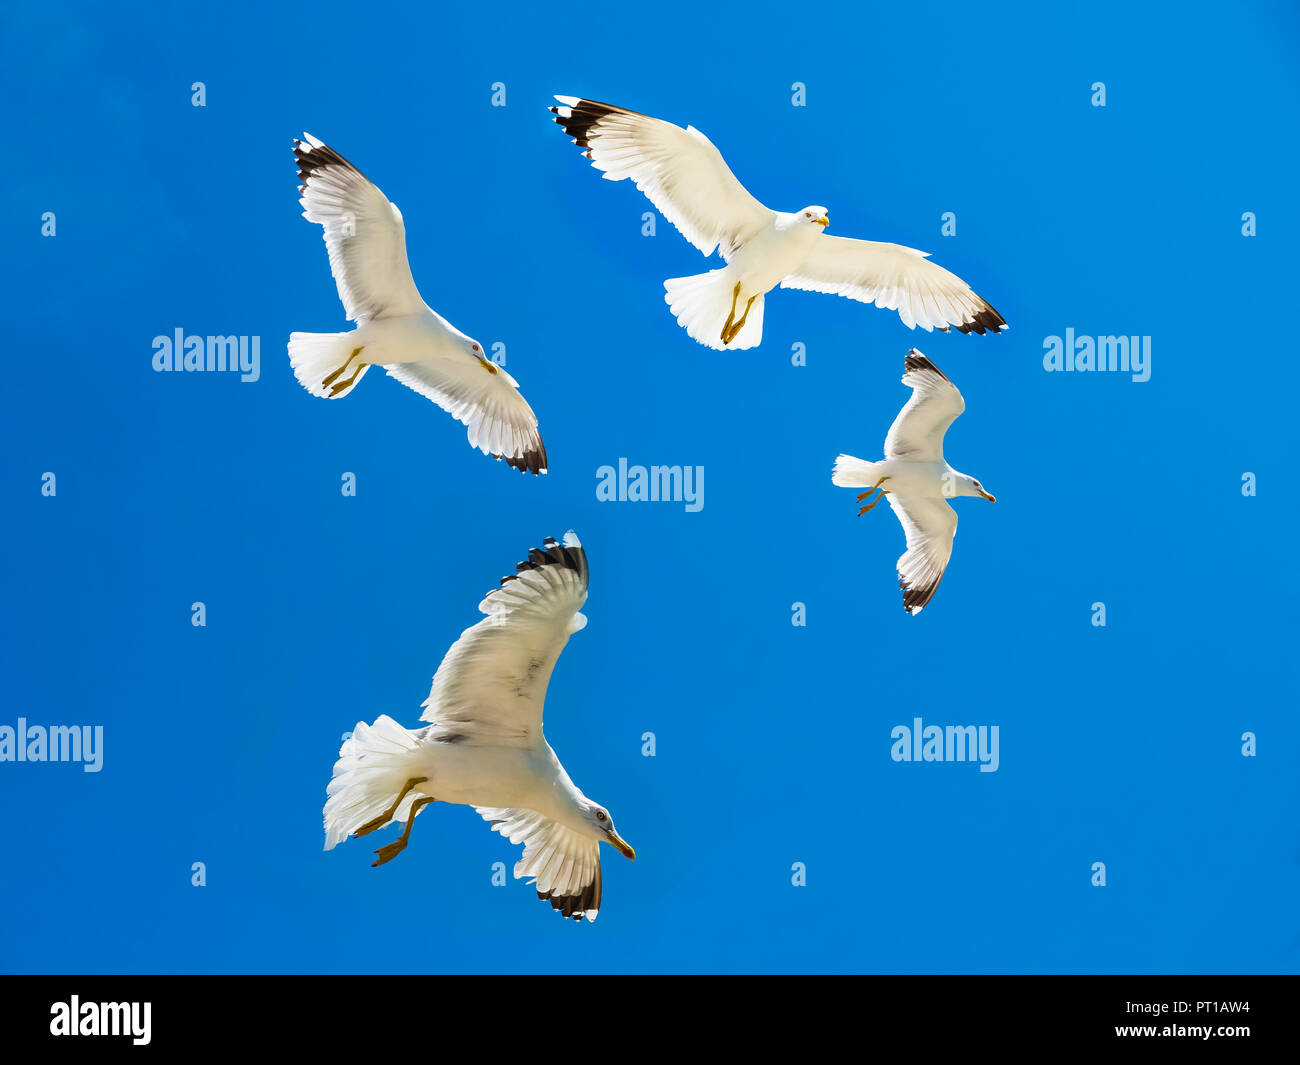 Cuatro gaviota volando en frente de cielo azul Foto de stock